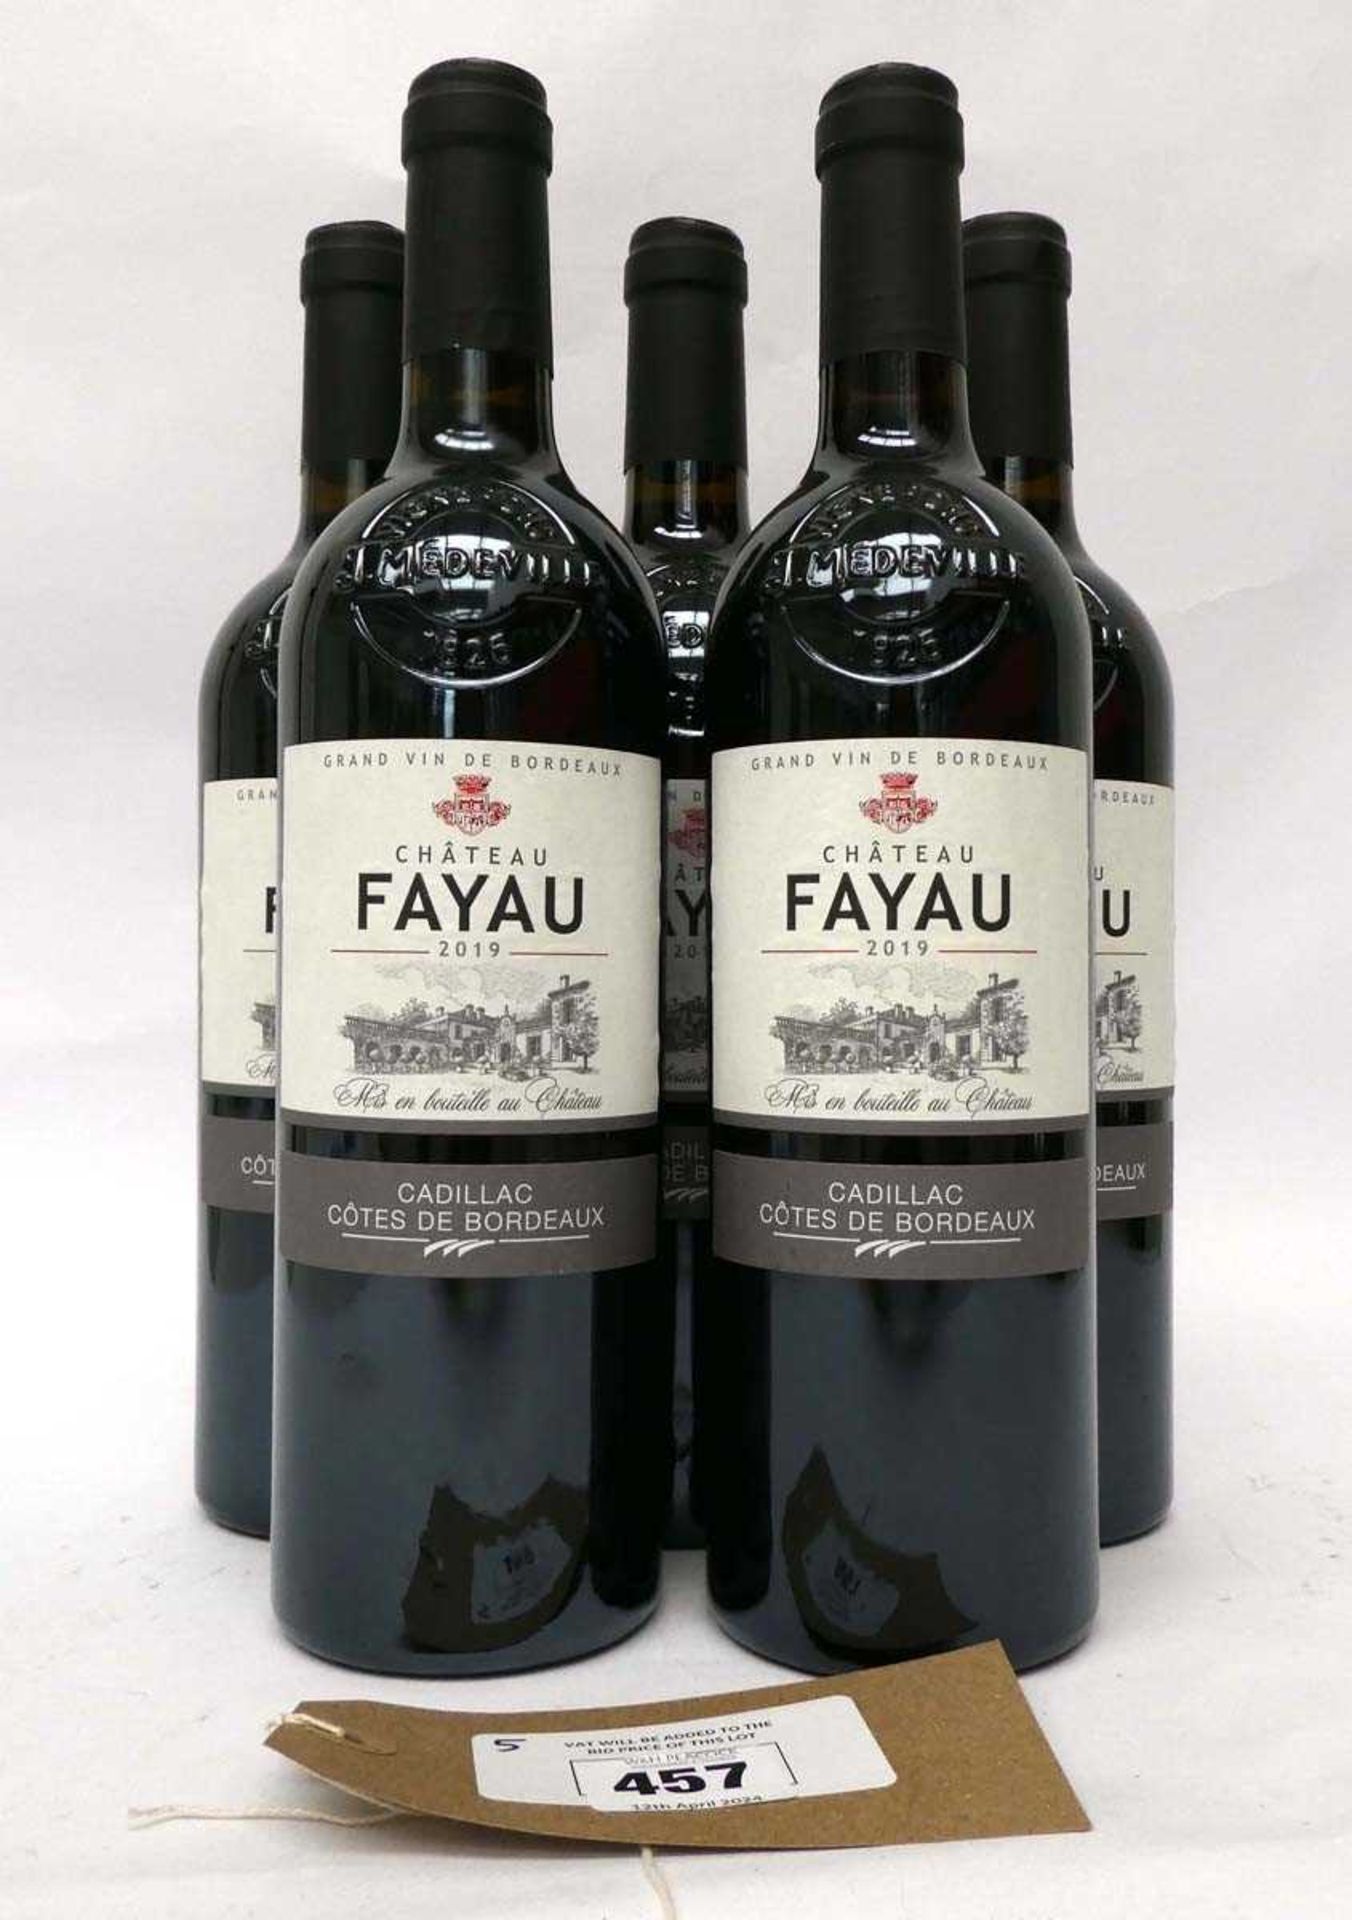 +VAT 5 bottles of 2019 Chateau Fayau Cadillac Cotes de Bordeaux (Note VAT added to bid price)